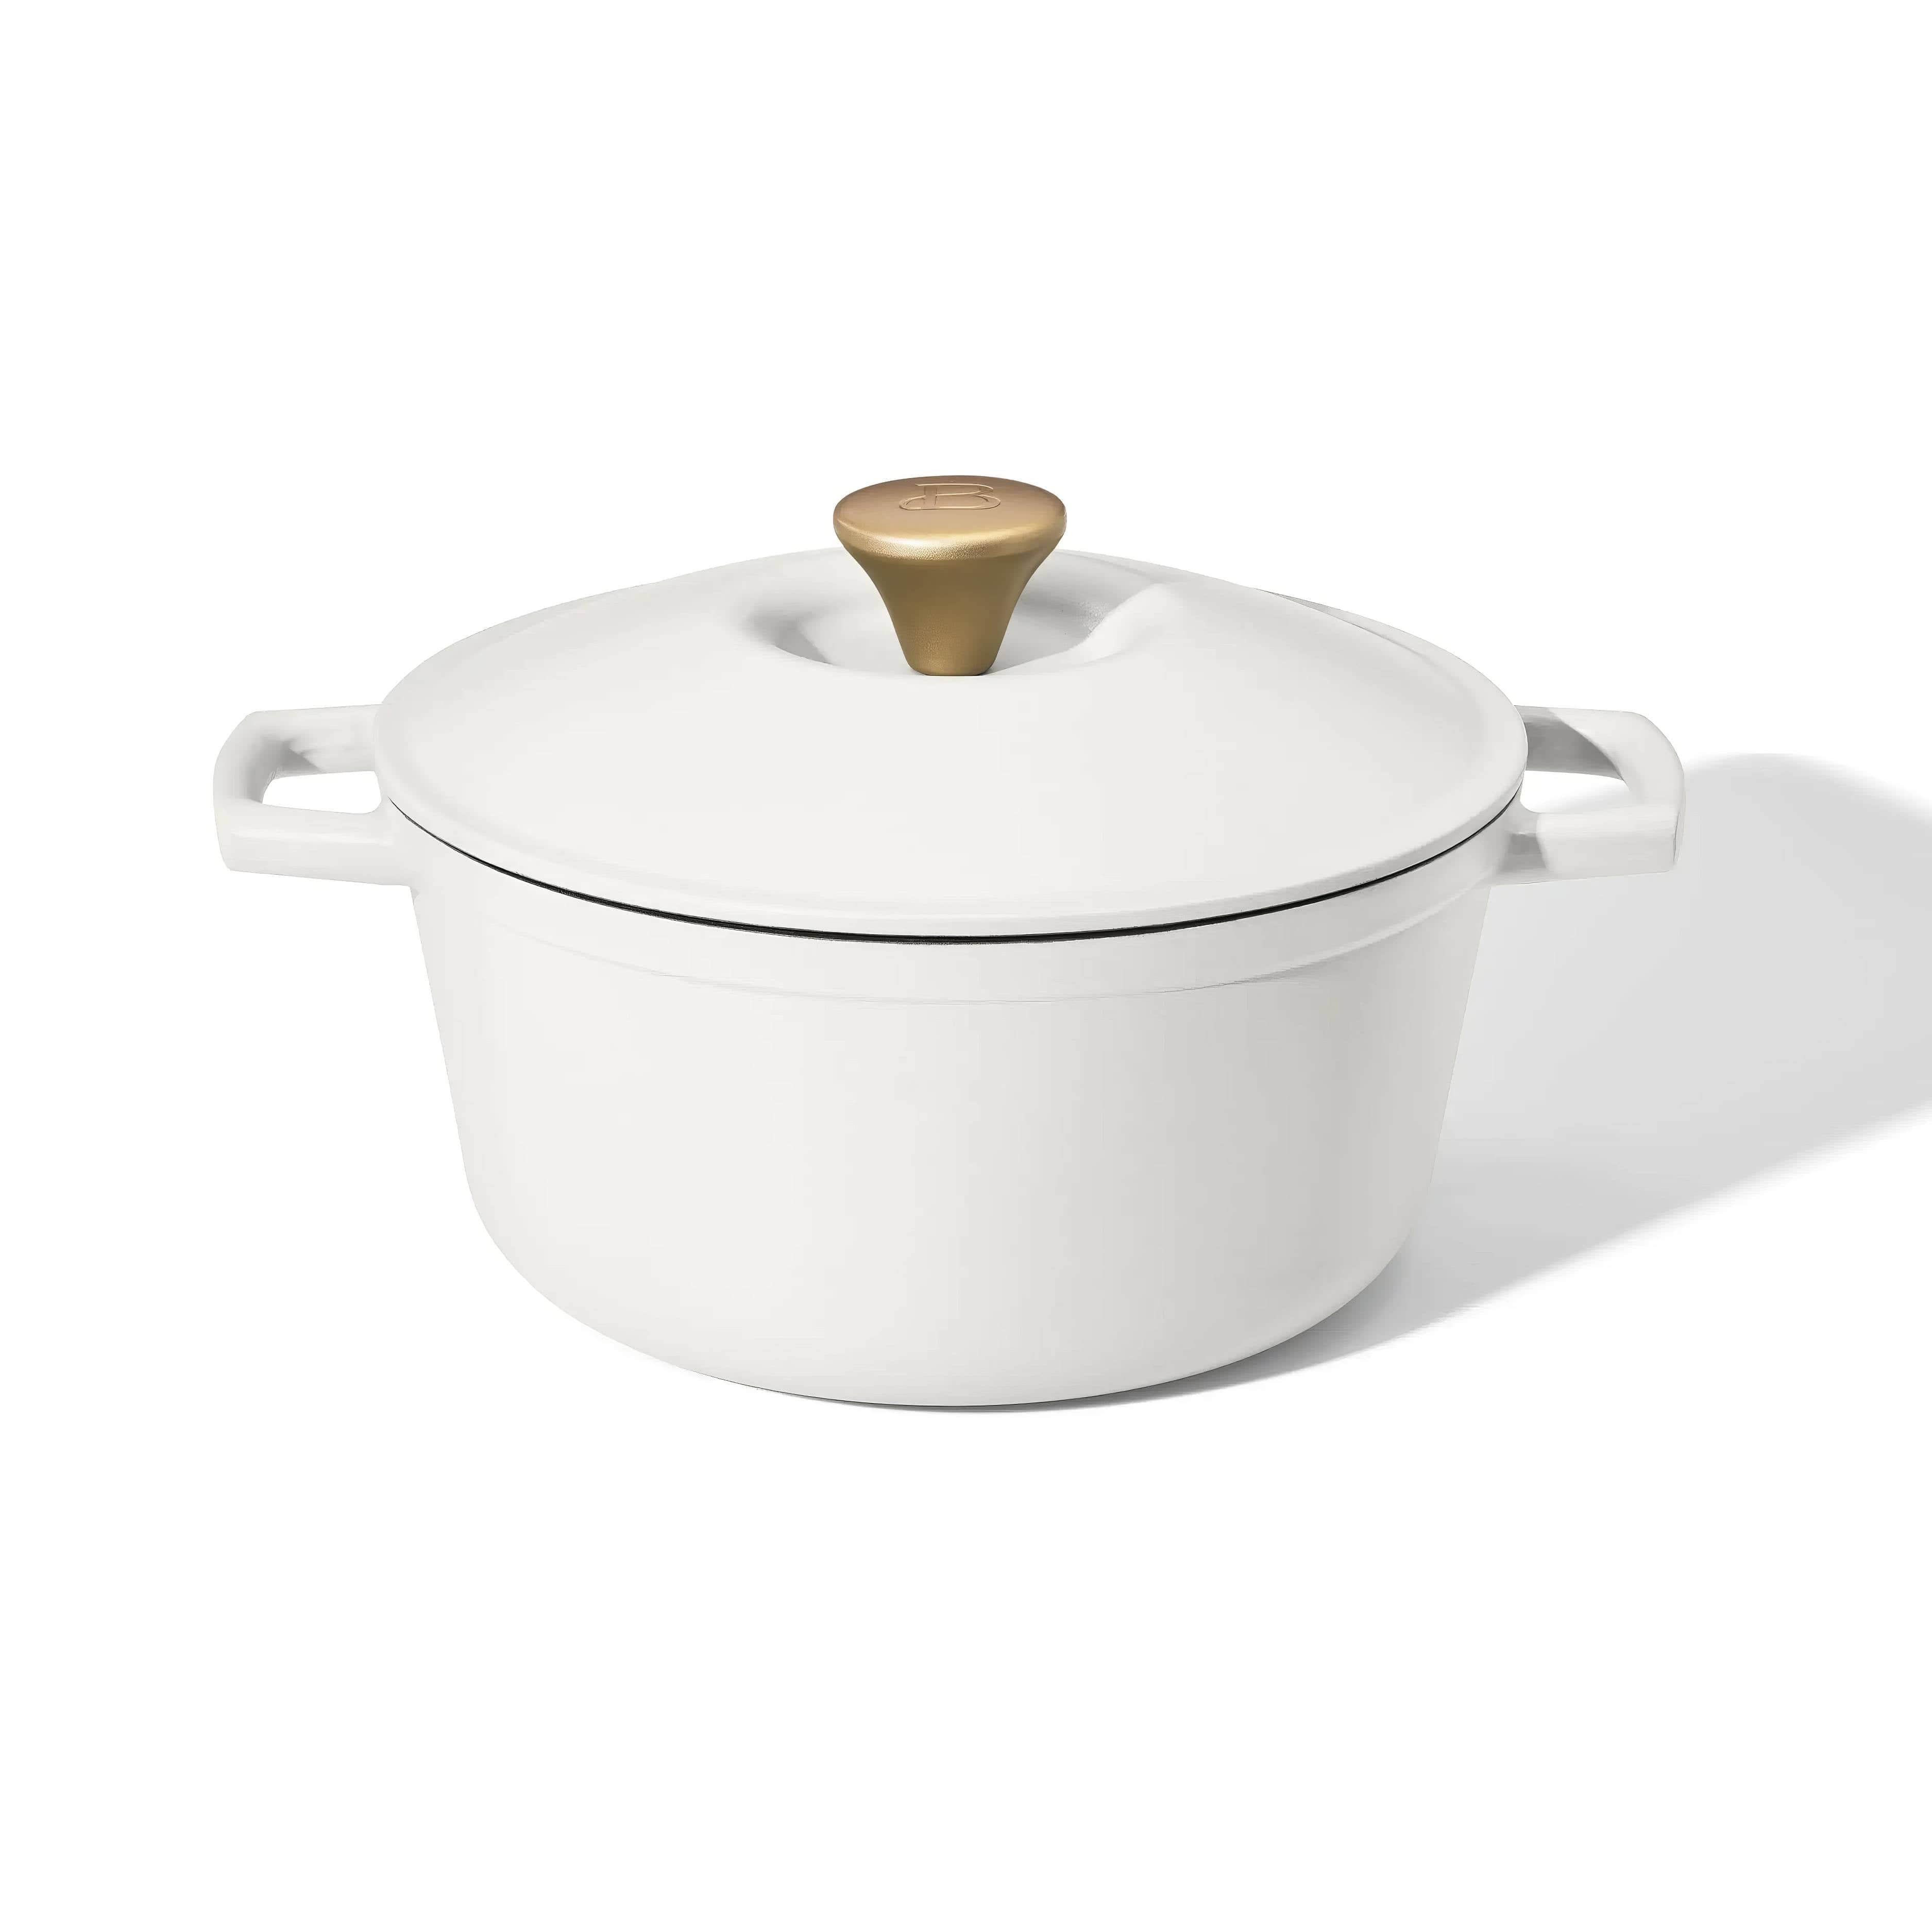 Drew Barrymore White Icing 5-Quart Cast Iron Round Dutch Oven - Elegant Kitchen Cookware White Icing / United States